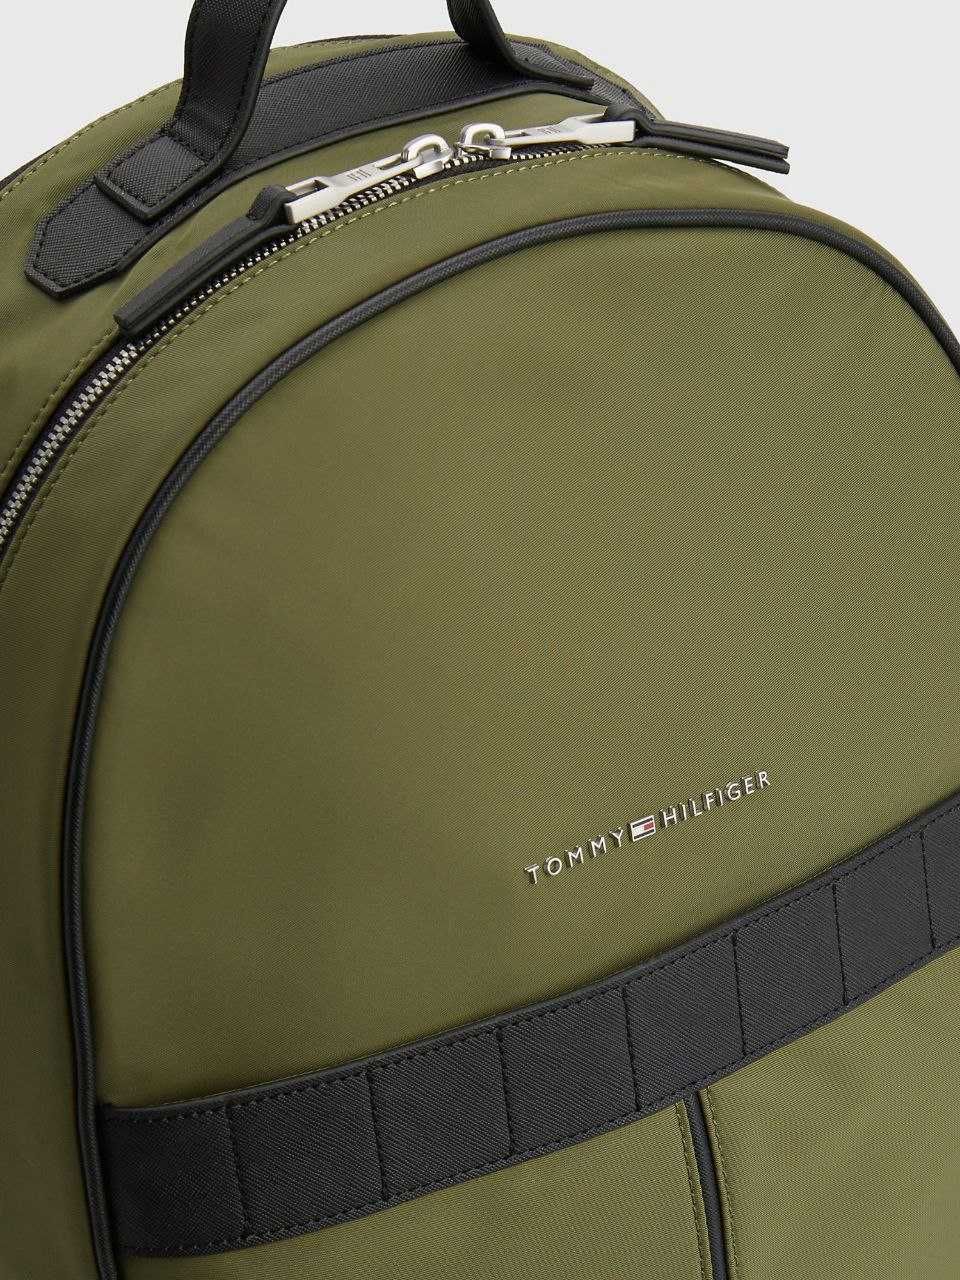 Рюкзак Tommy Hilfiger Commuter Nylon, цвет хаки, отличное состояние